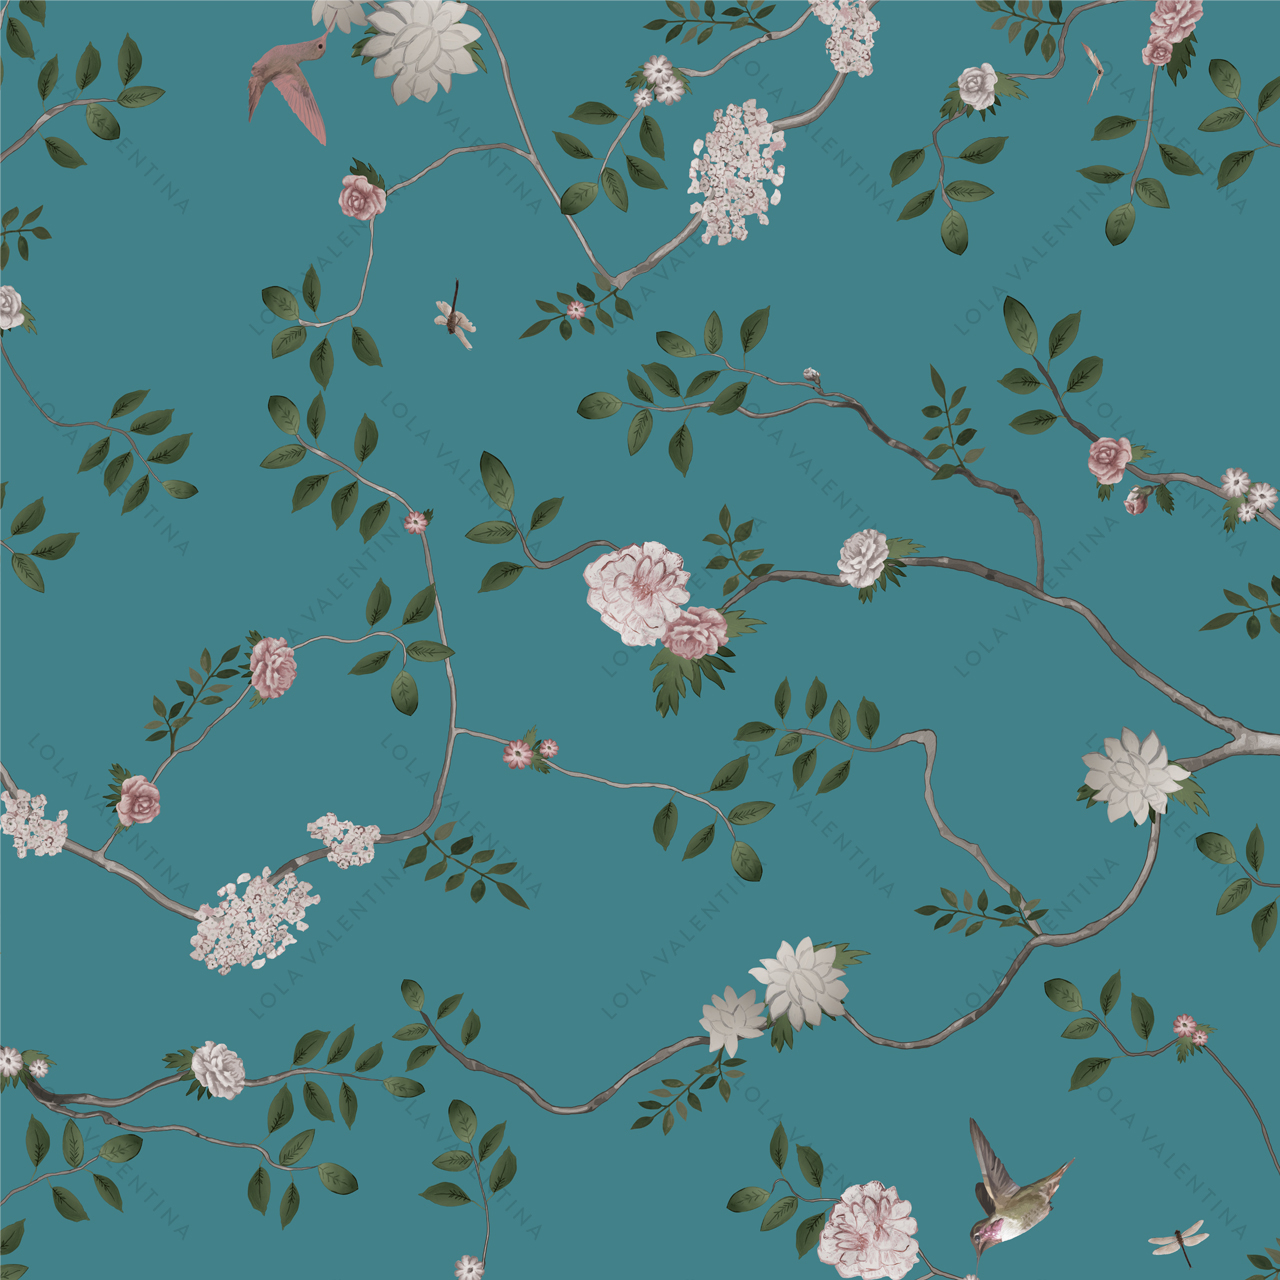 Teal-Blue-Green-Flor-Floral-Branches-Birds-Flowers-Garden-Pattern